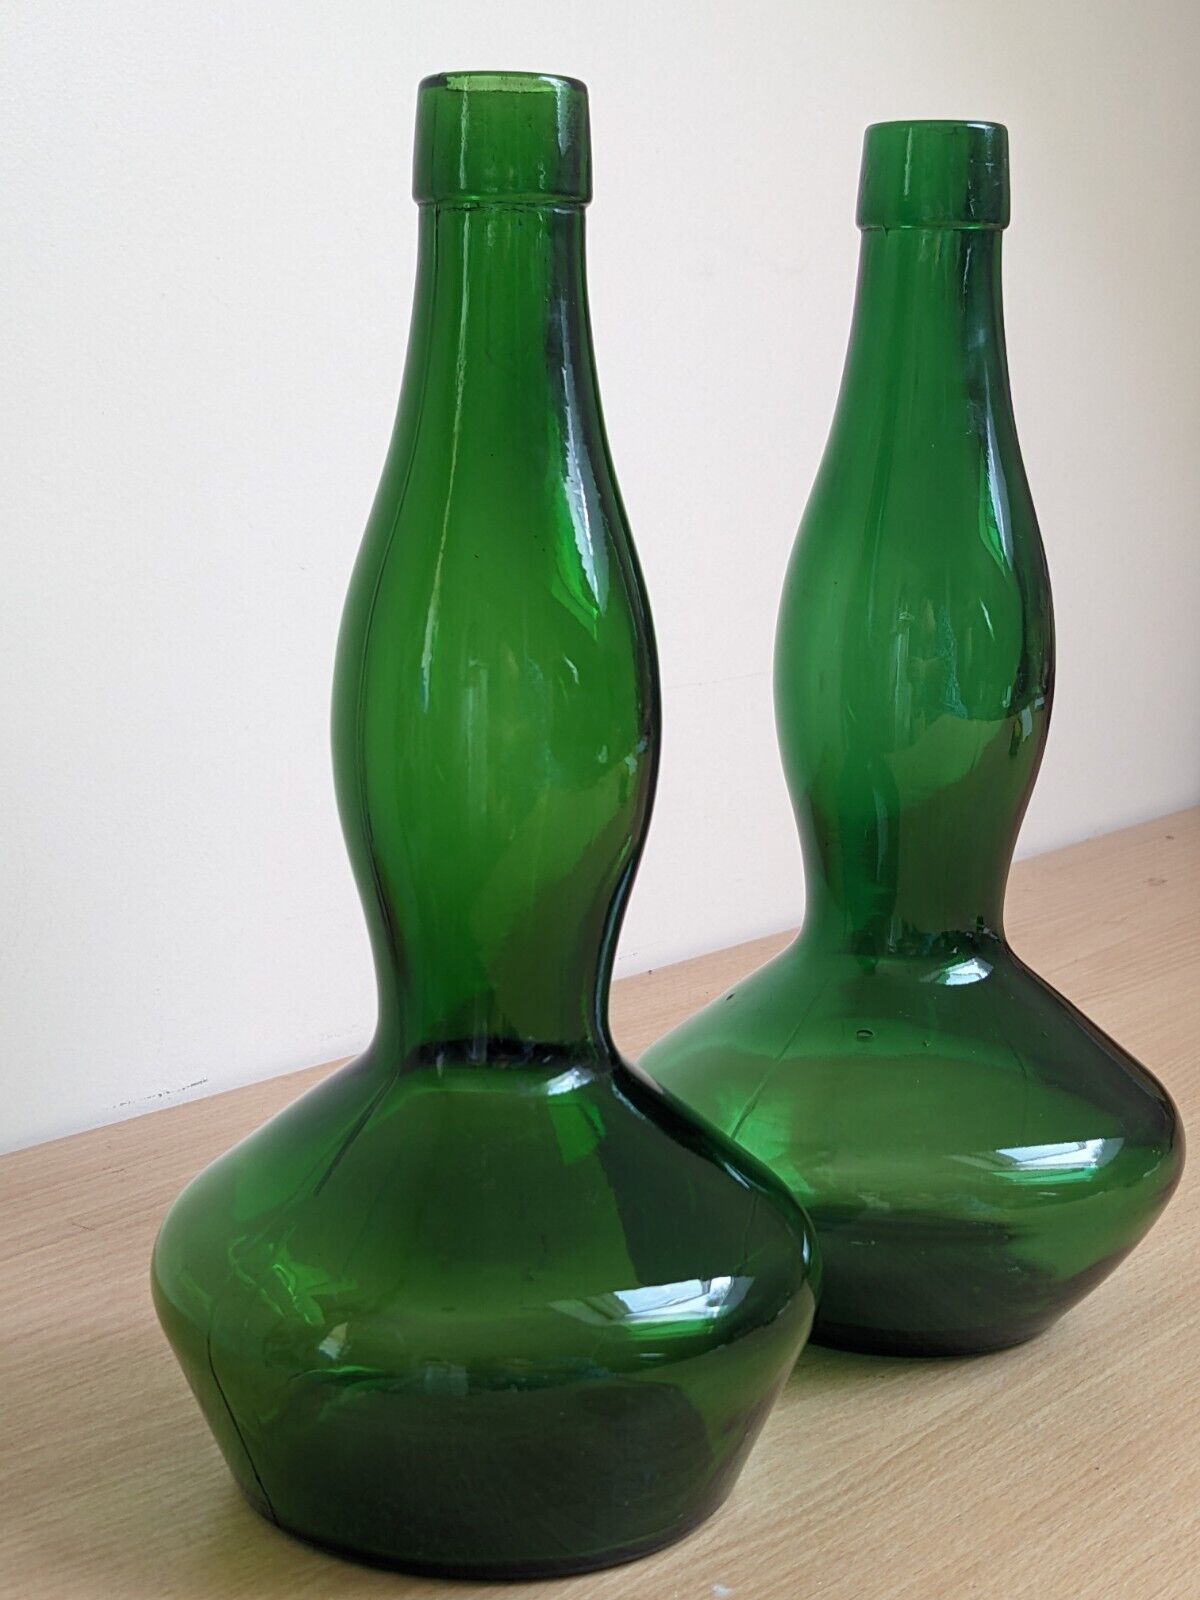 Pair of Vintage Bulmers Cider Green Glass Bottles